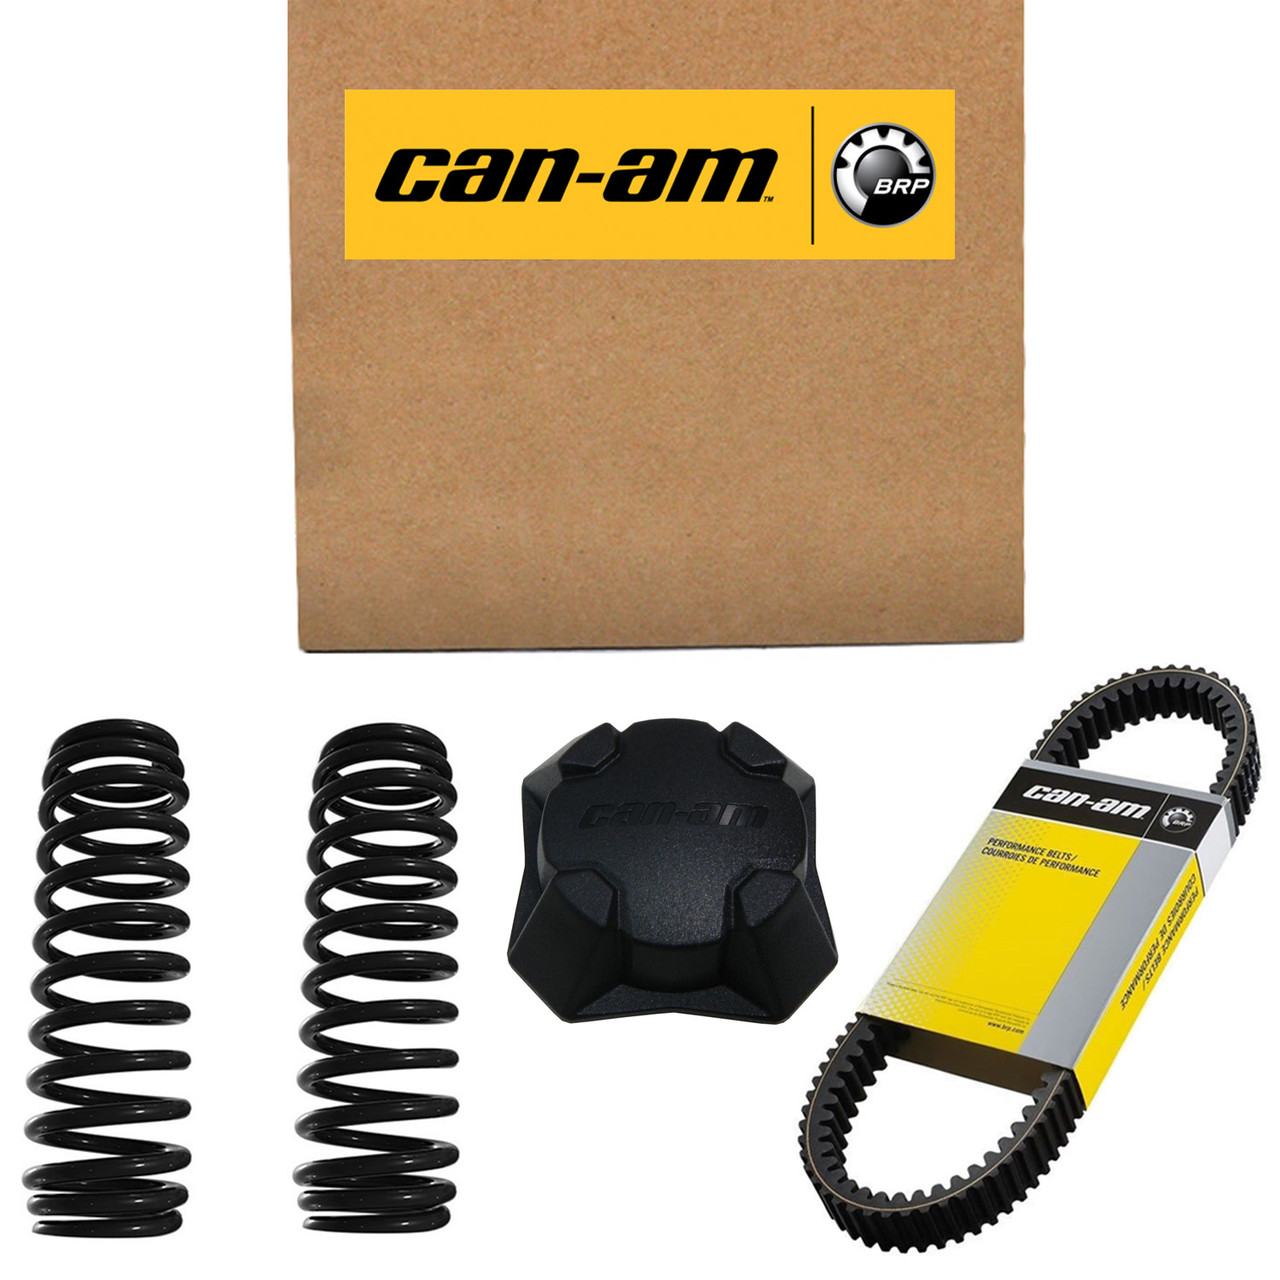 Can-Am New OEM Gear Box, 420684226